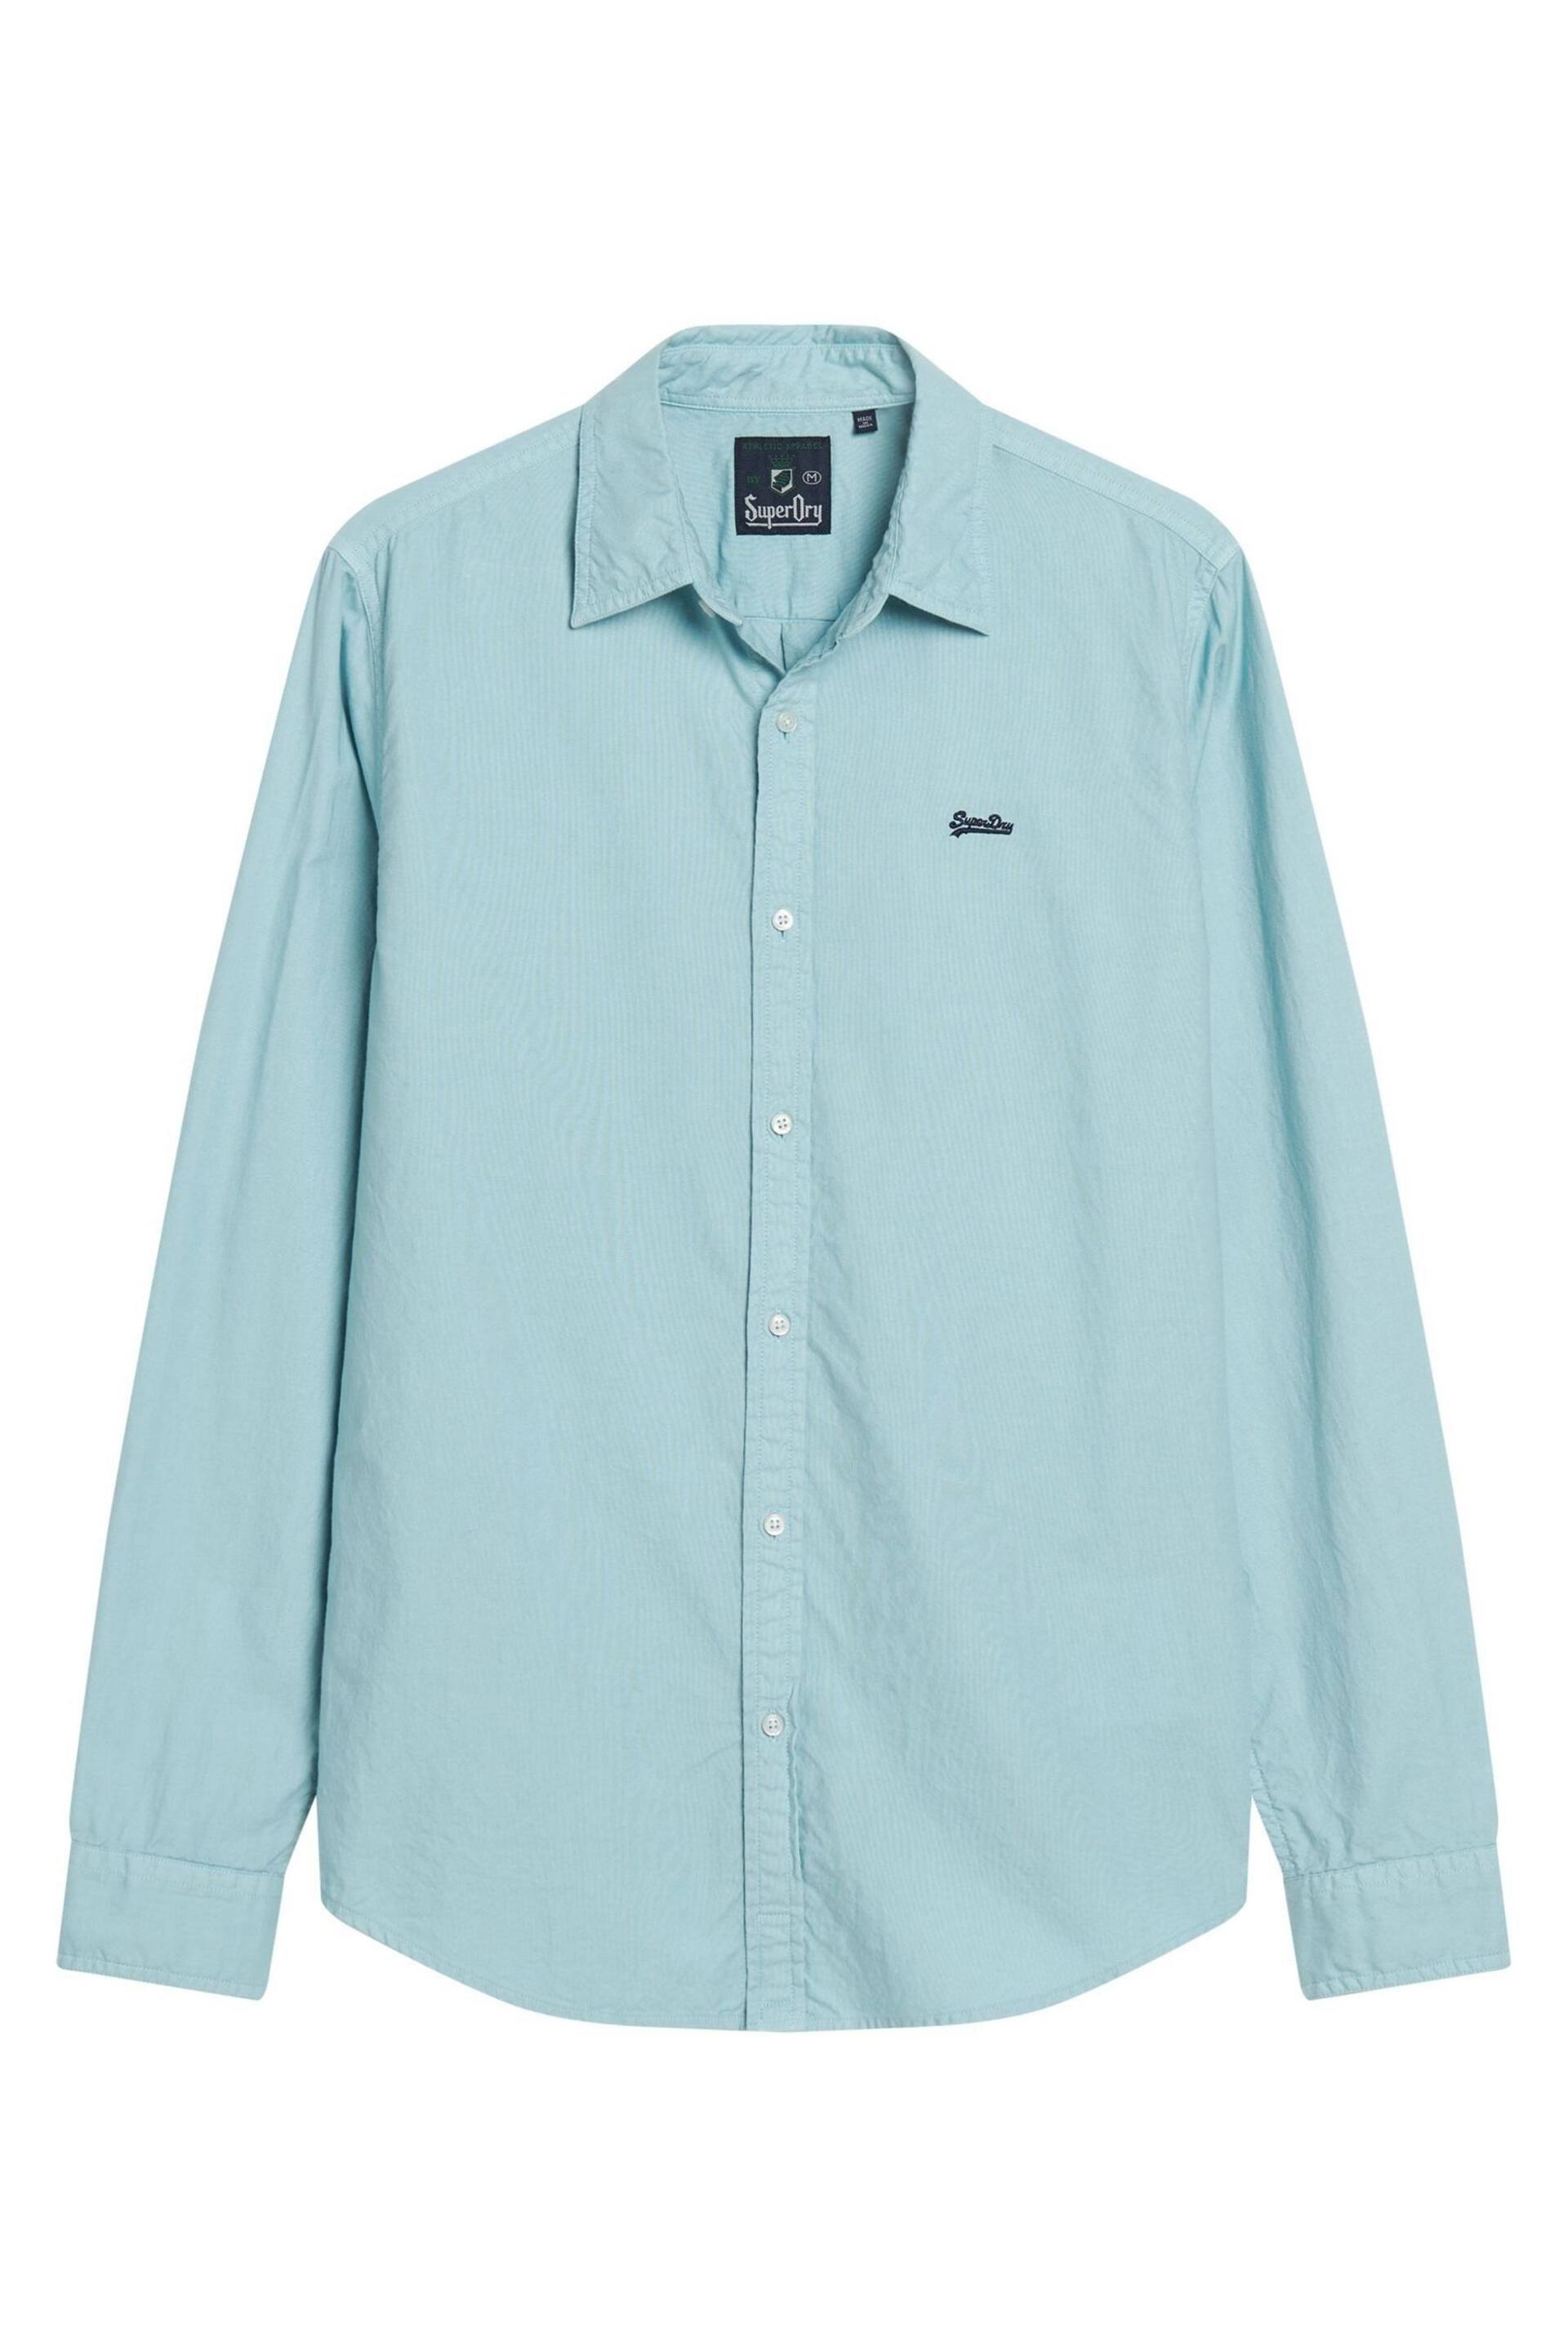 Superdry Blue Overdyed Organic Cotton Long Sleeve Shirt - Image 4 of 6